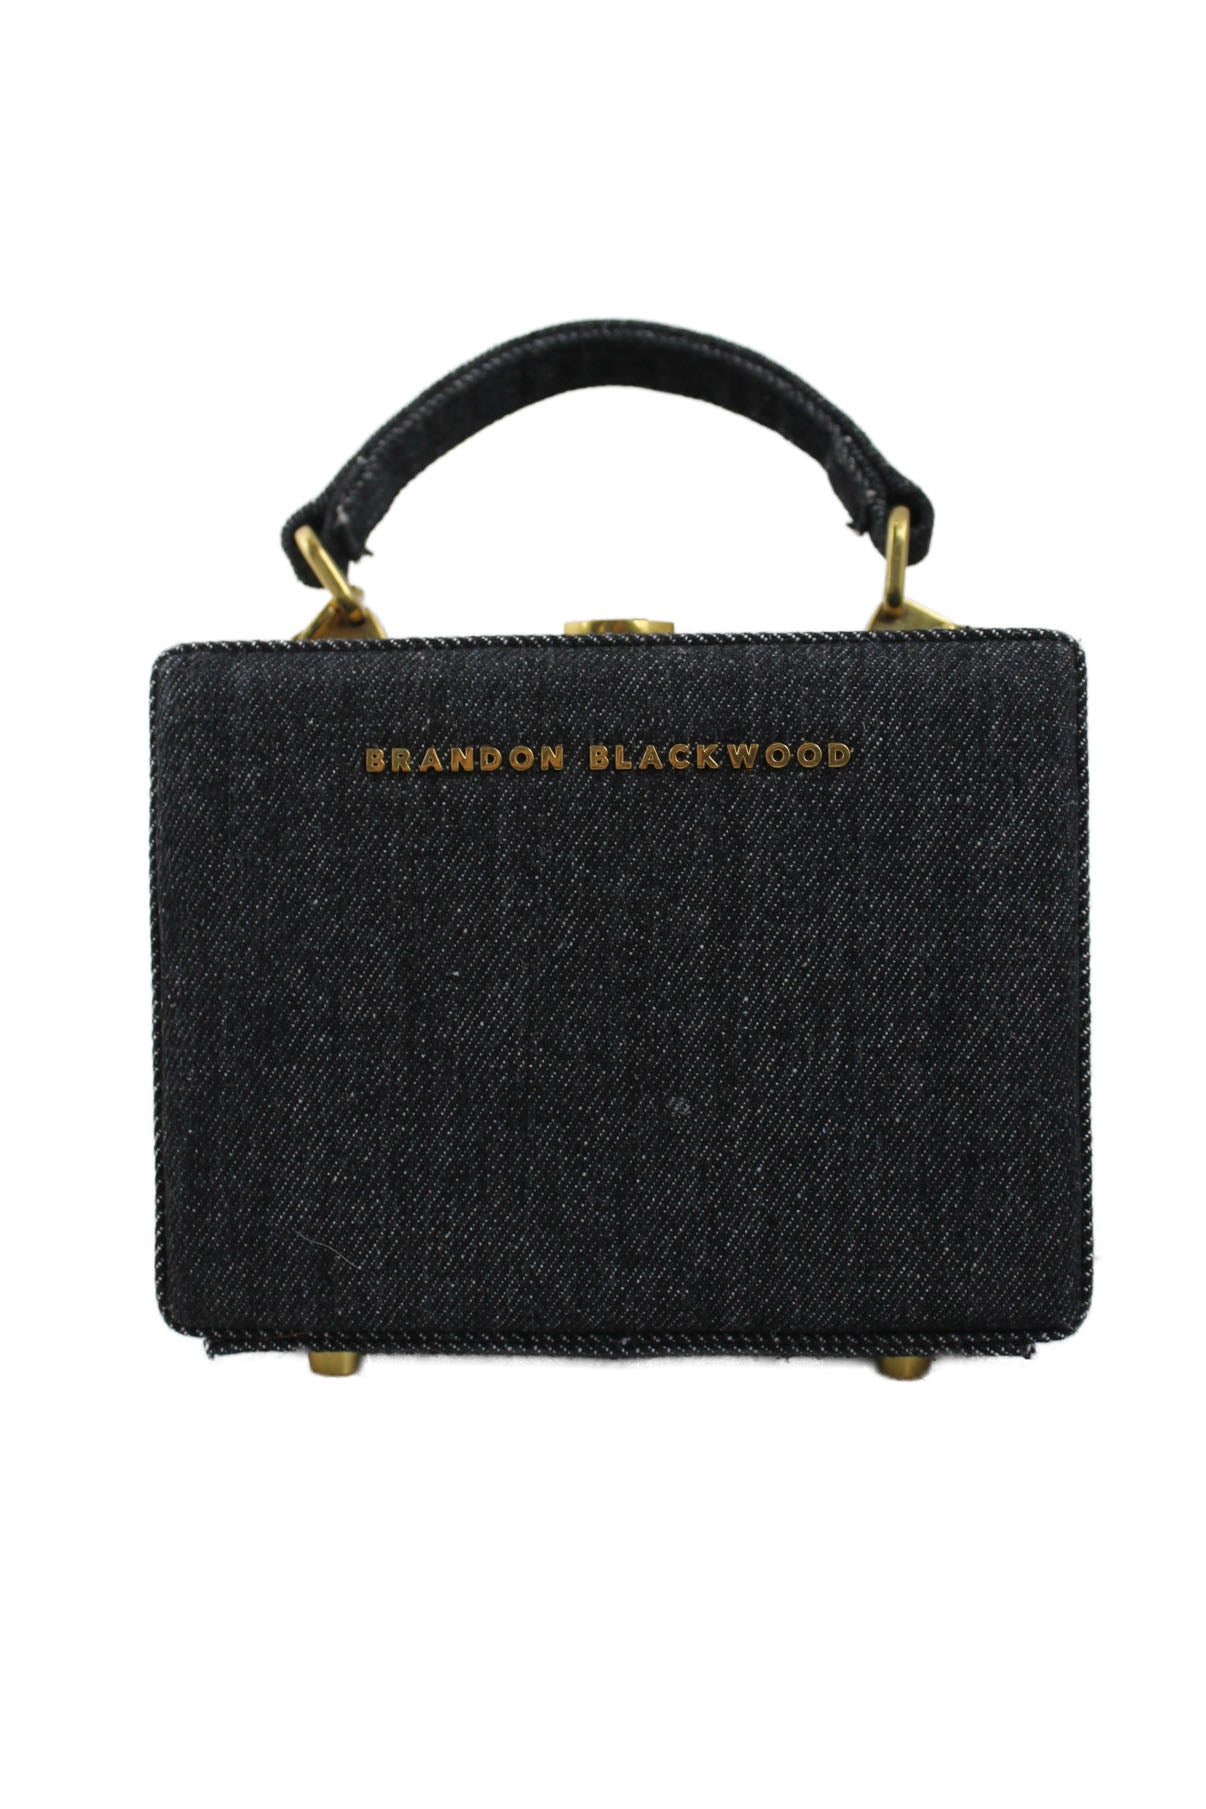 front of brandon blackwood dark denim trunk bag. features square shape, gold toned hardware, adjustable strap, and lock clasp closure. 